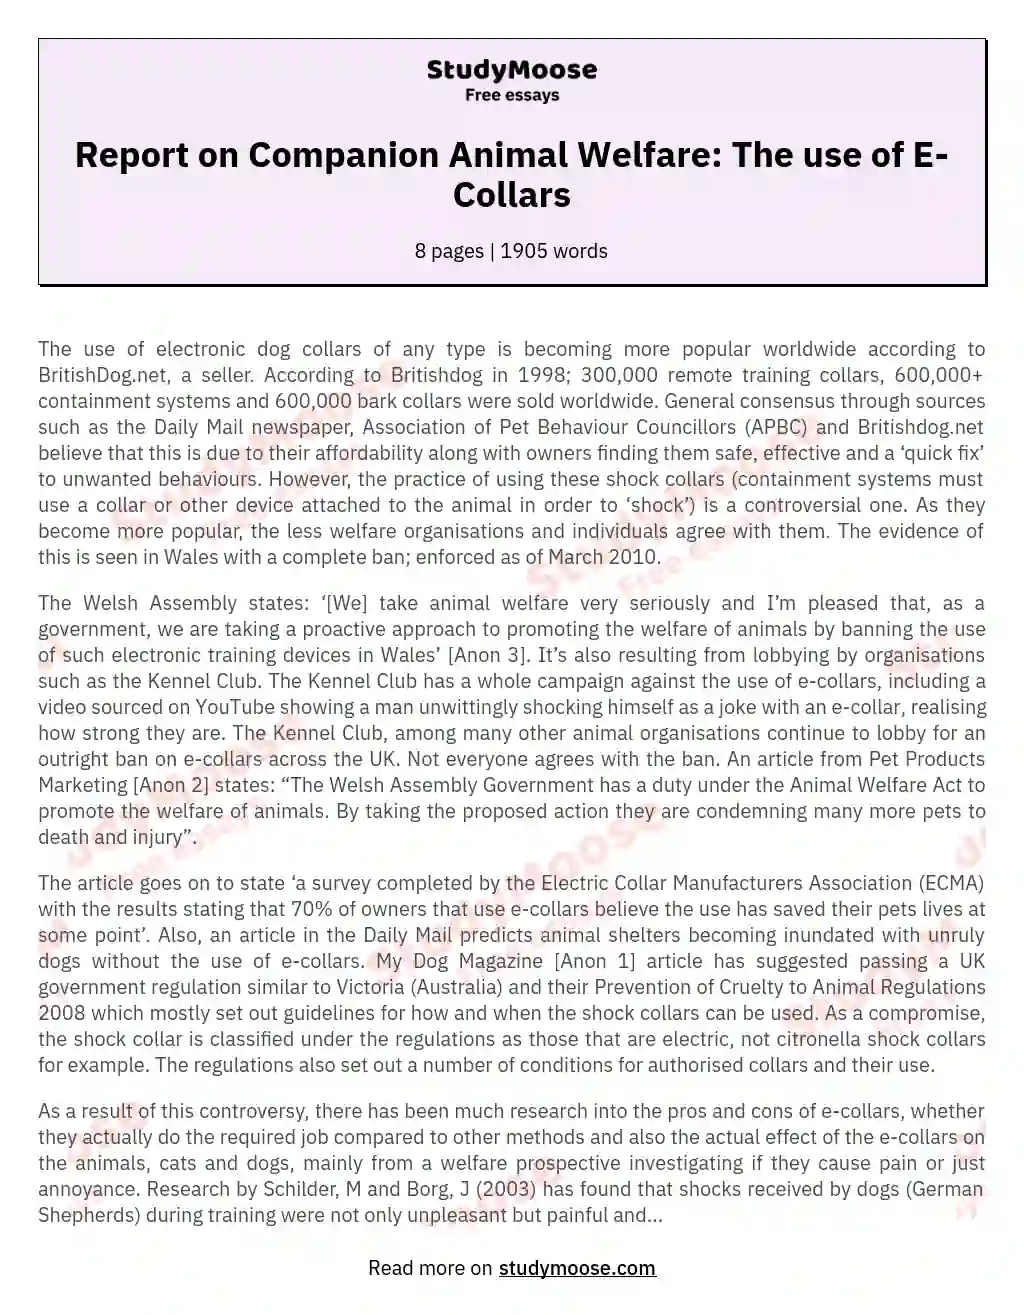 Report on Companion Animal Welfare: The use of E-Collars essay